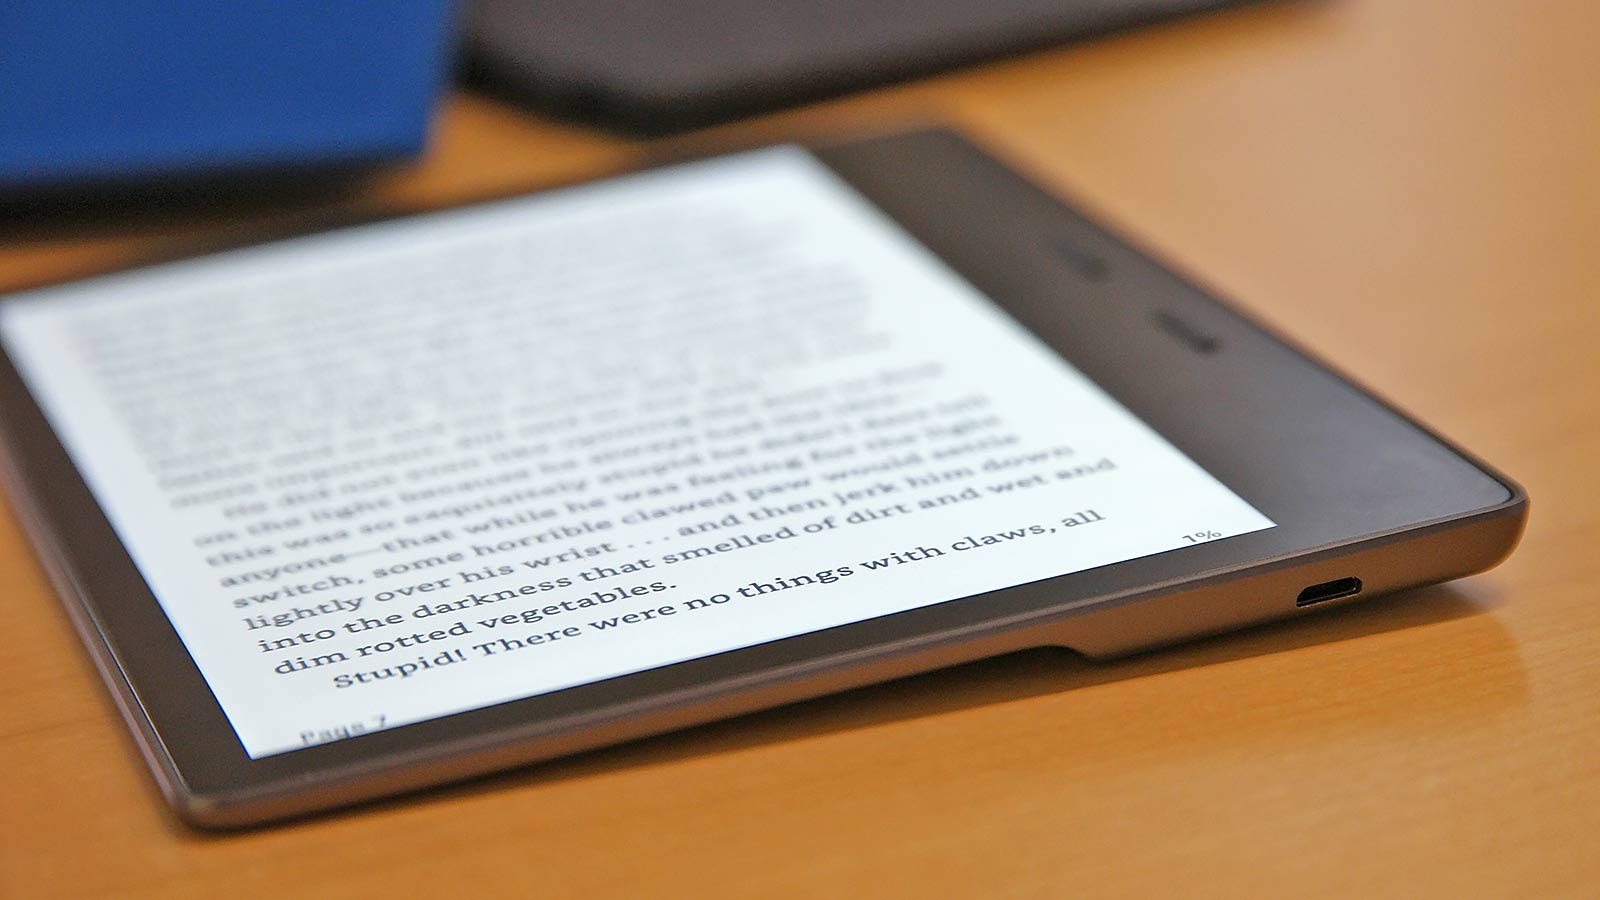 Amazon’s New Kindle Oasis: The Gizmodo Hands On